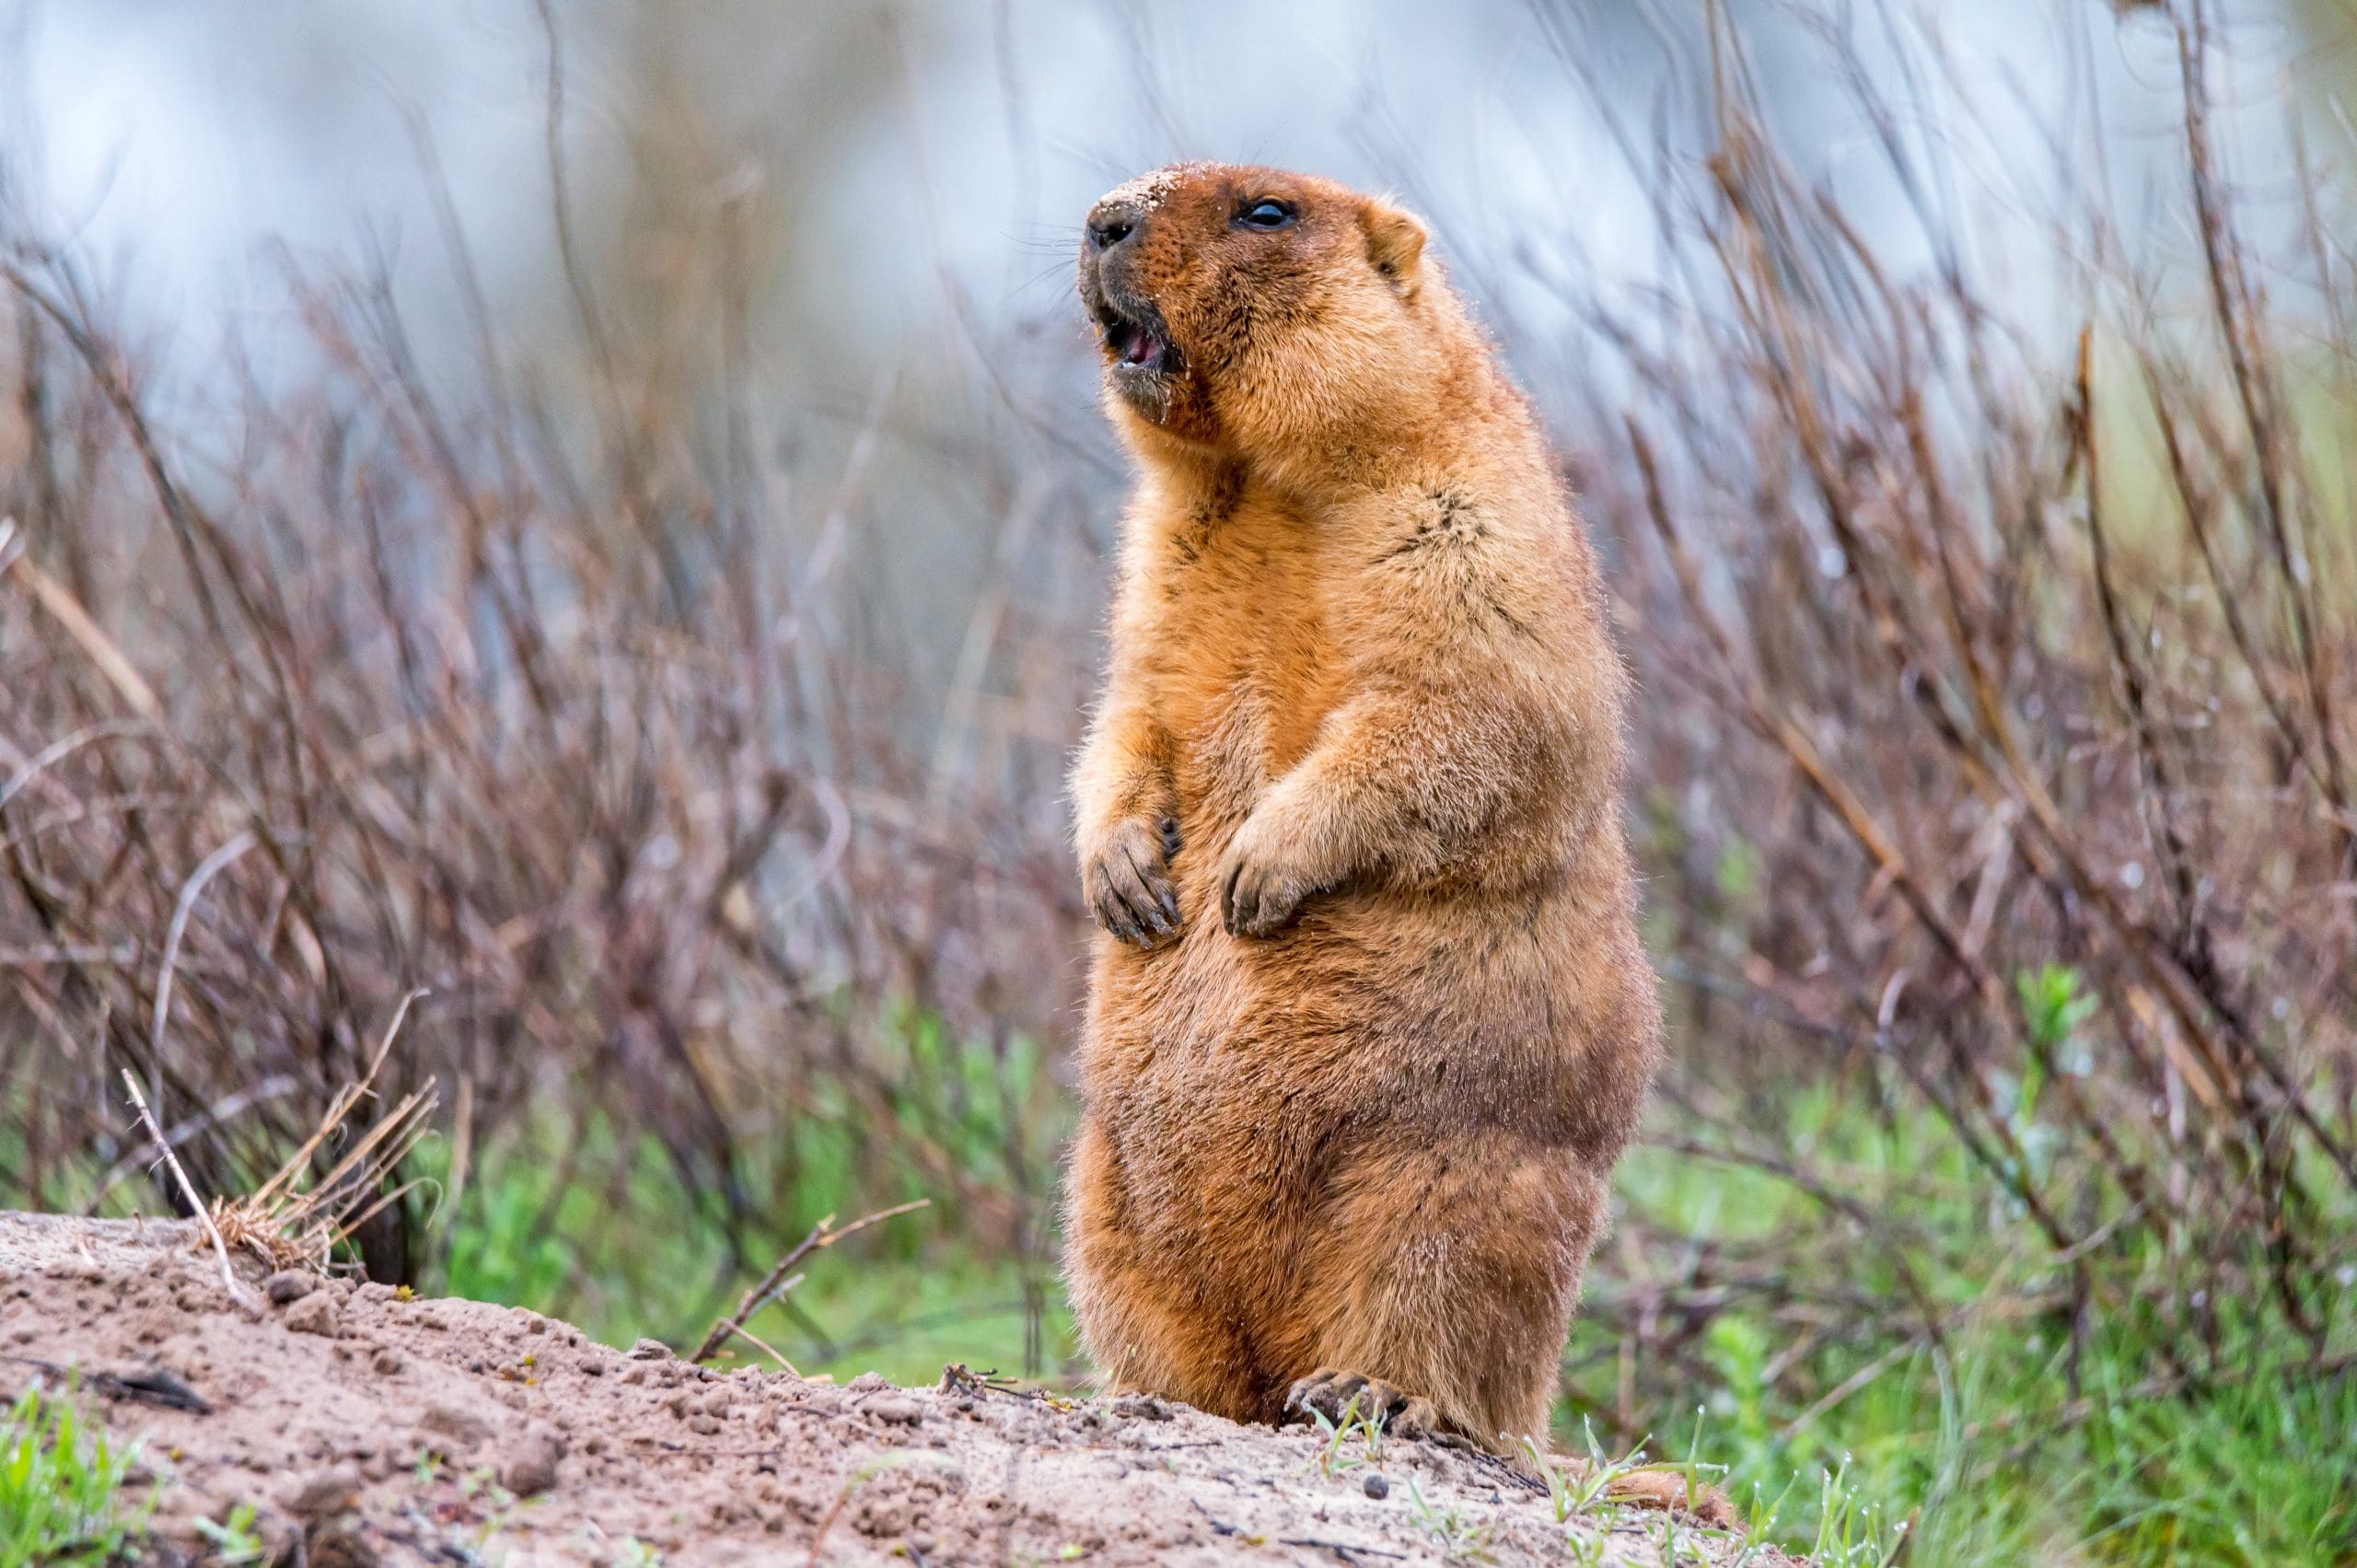 bobak-marmot-marmota-bobak-steppe-groundhog's day-groundhog